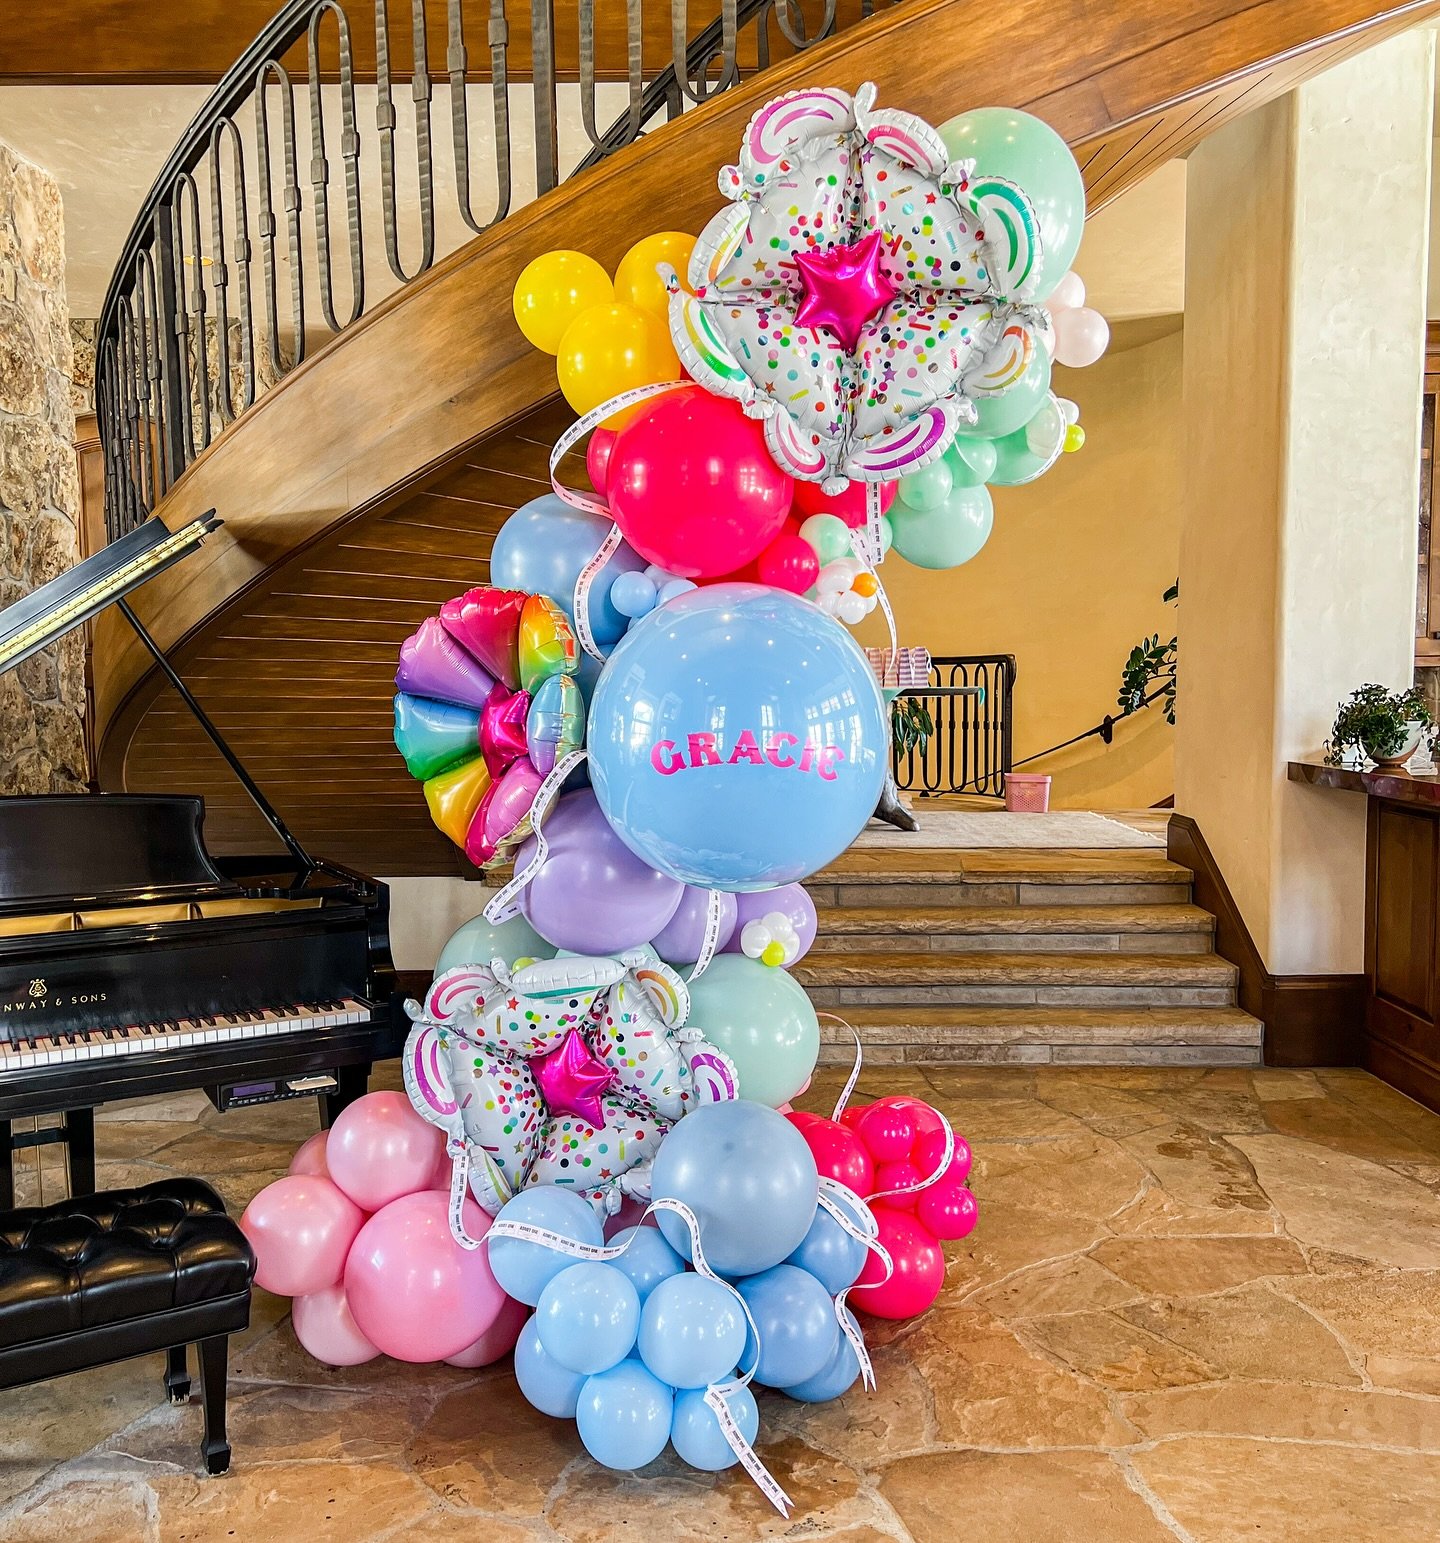 Ferris wheels and fair vibes #!
.

.
.
. #balloontower #balloon #birthdayballoons #birthday🎂 #balloons #organic balloons #balloonprofessional #balloonmosaic ballooncolumn #balloonarrangement #balloonmarquee #obsessed #🎈 #vail #balloonstylist #organ